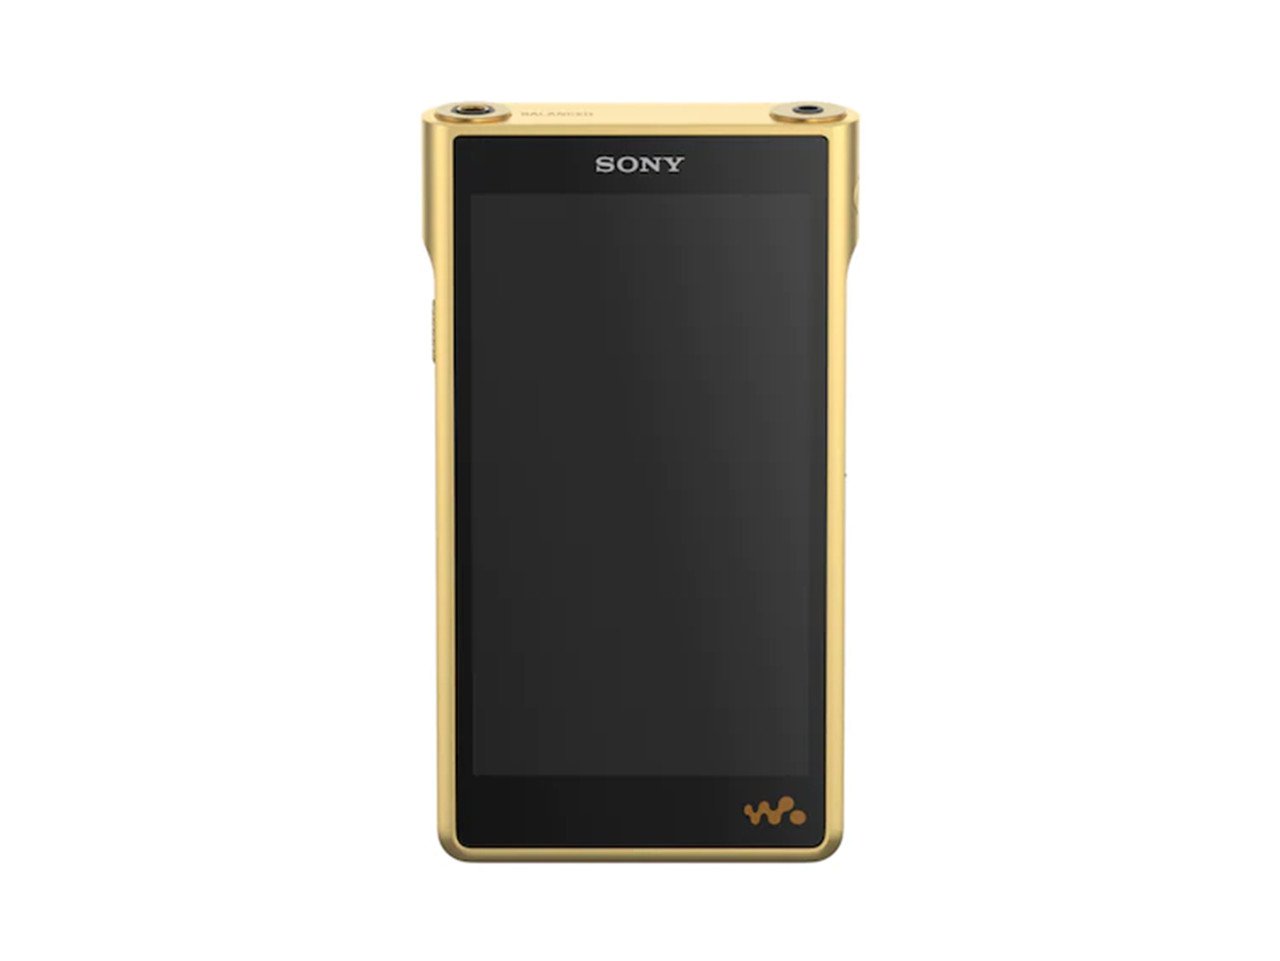 Sony WM1ZM2 Walkman® Signature Series Music Player